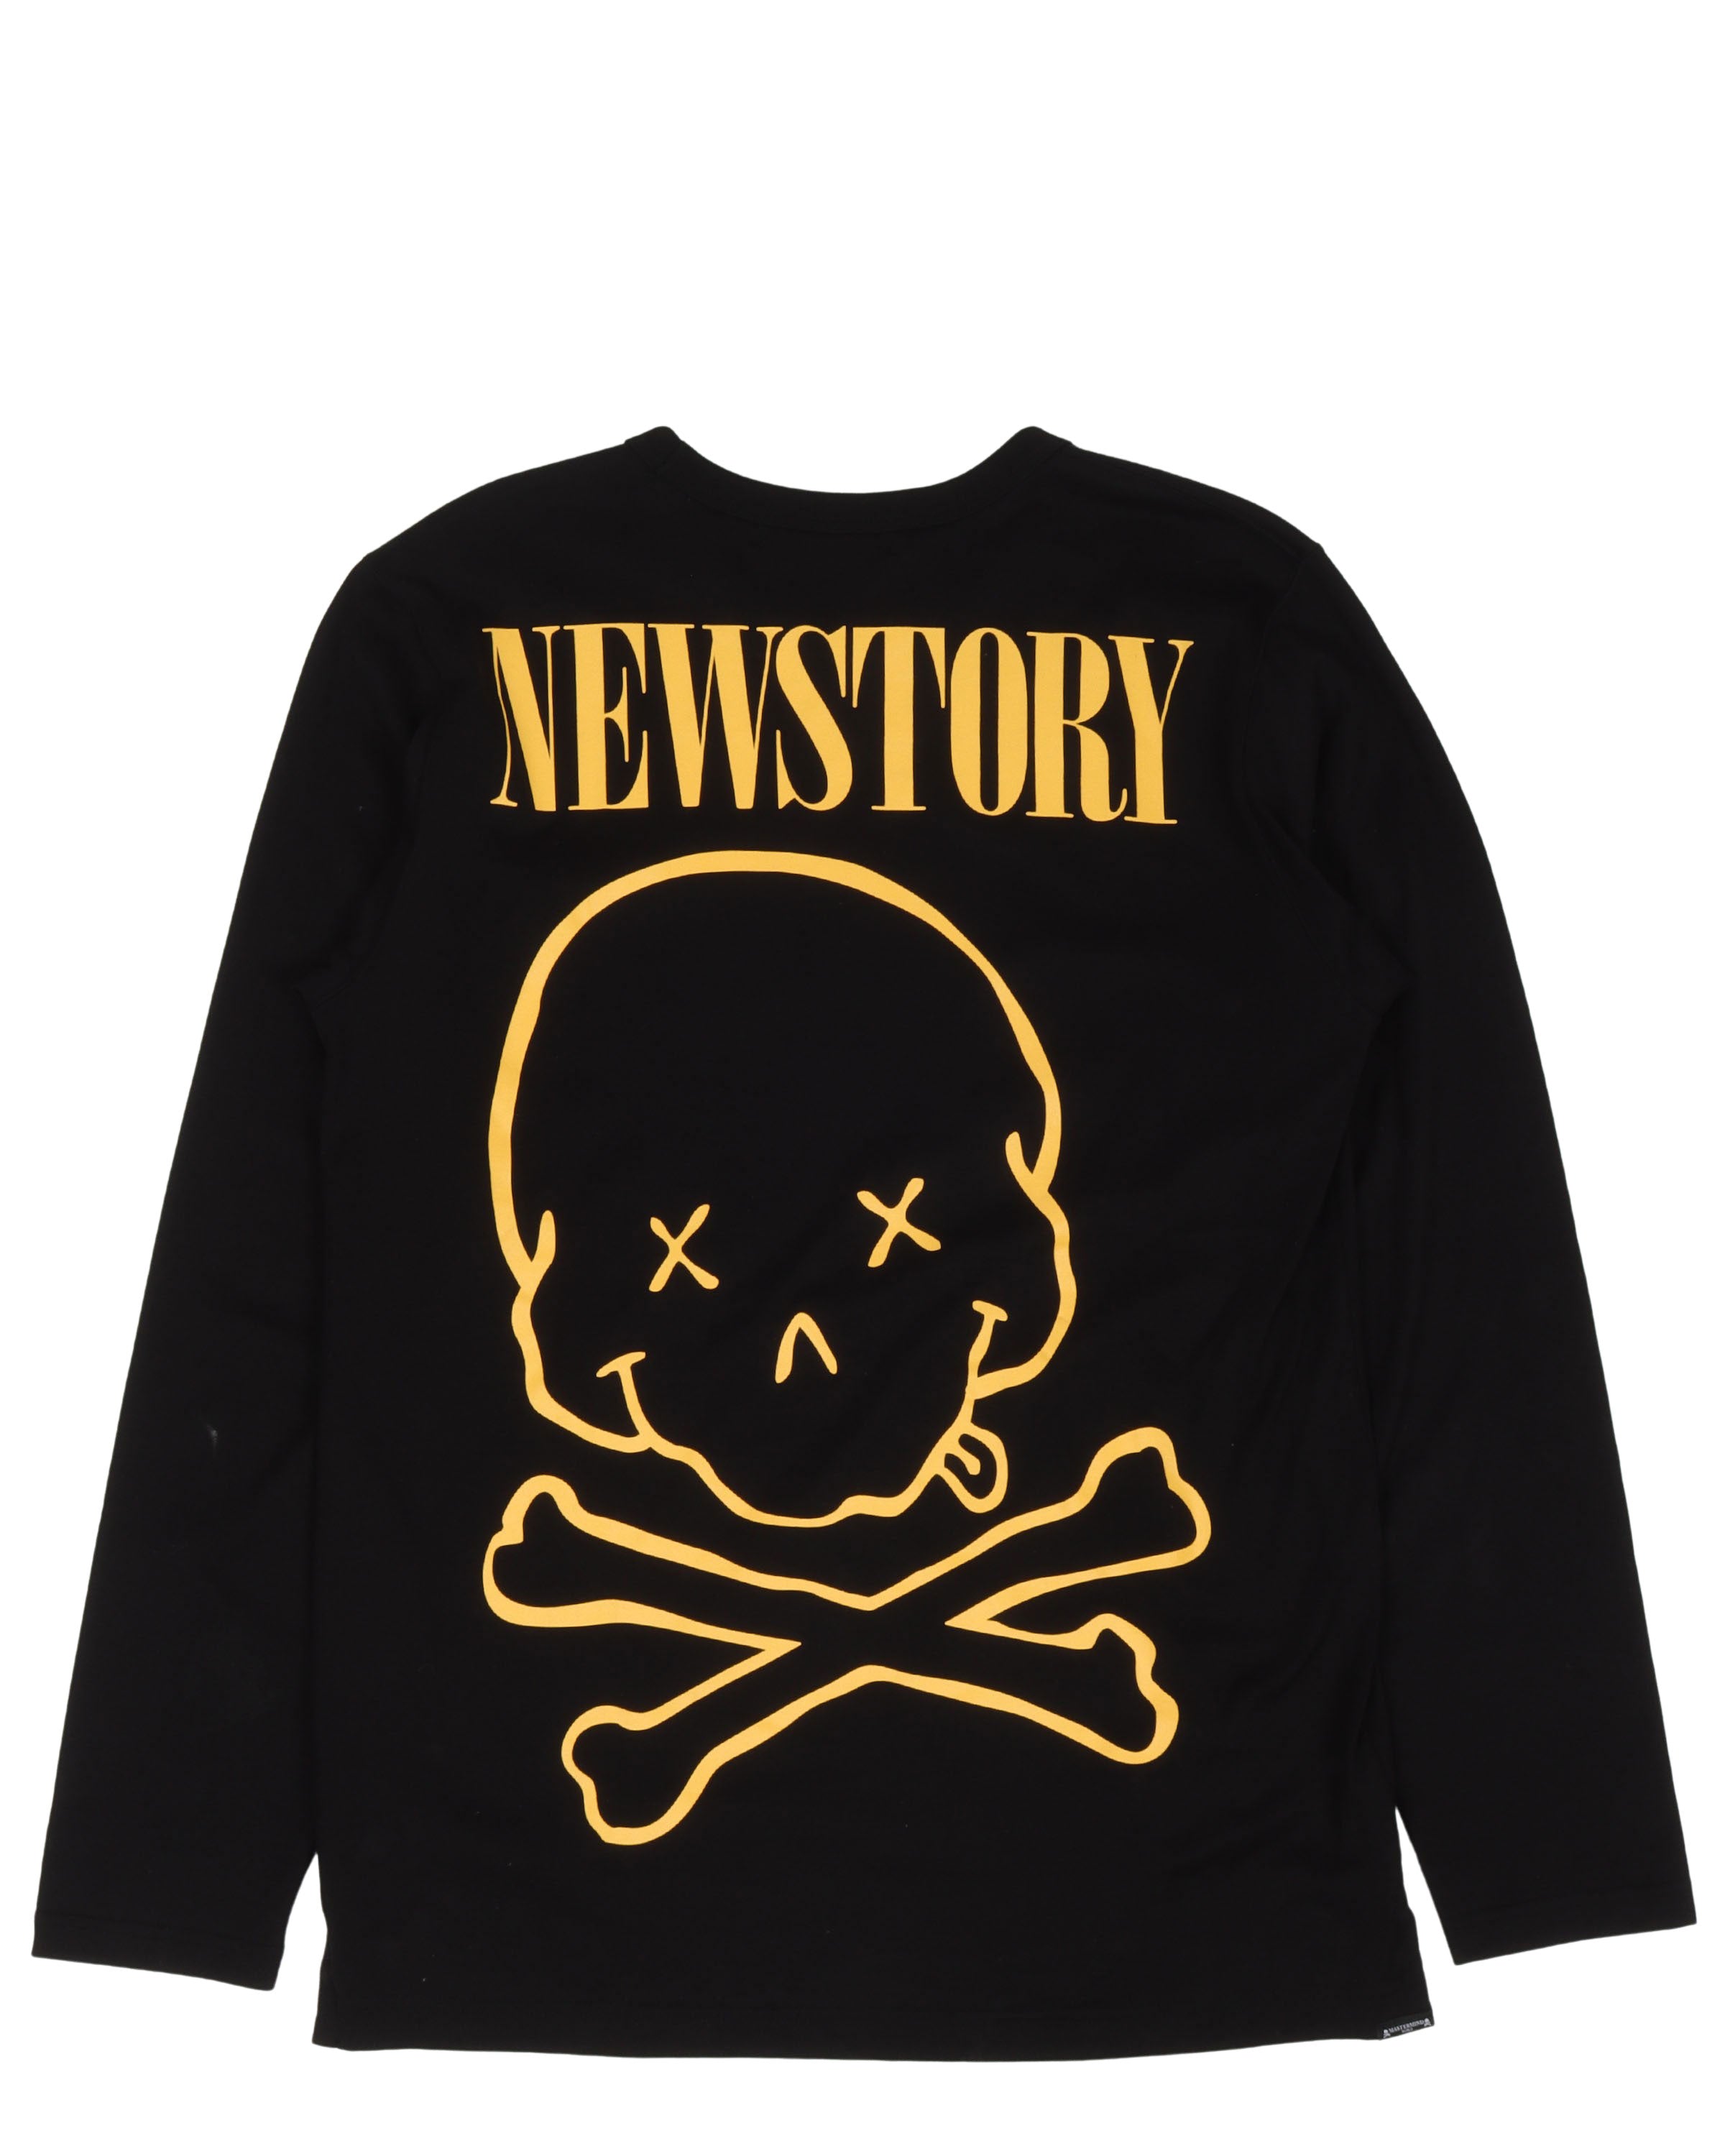 Nirvana Newstory Long Sleeve T-Shirt